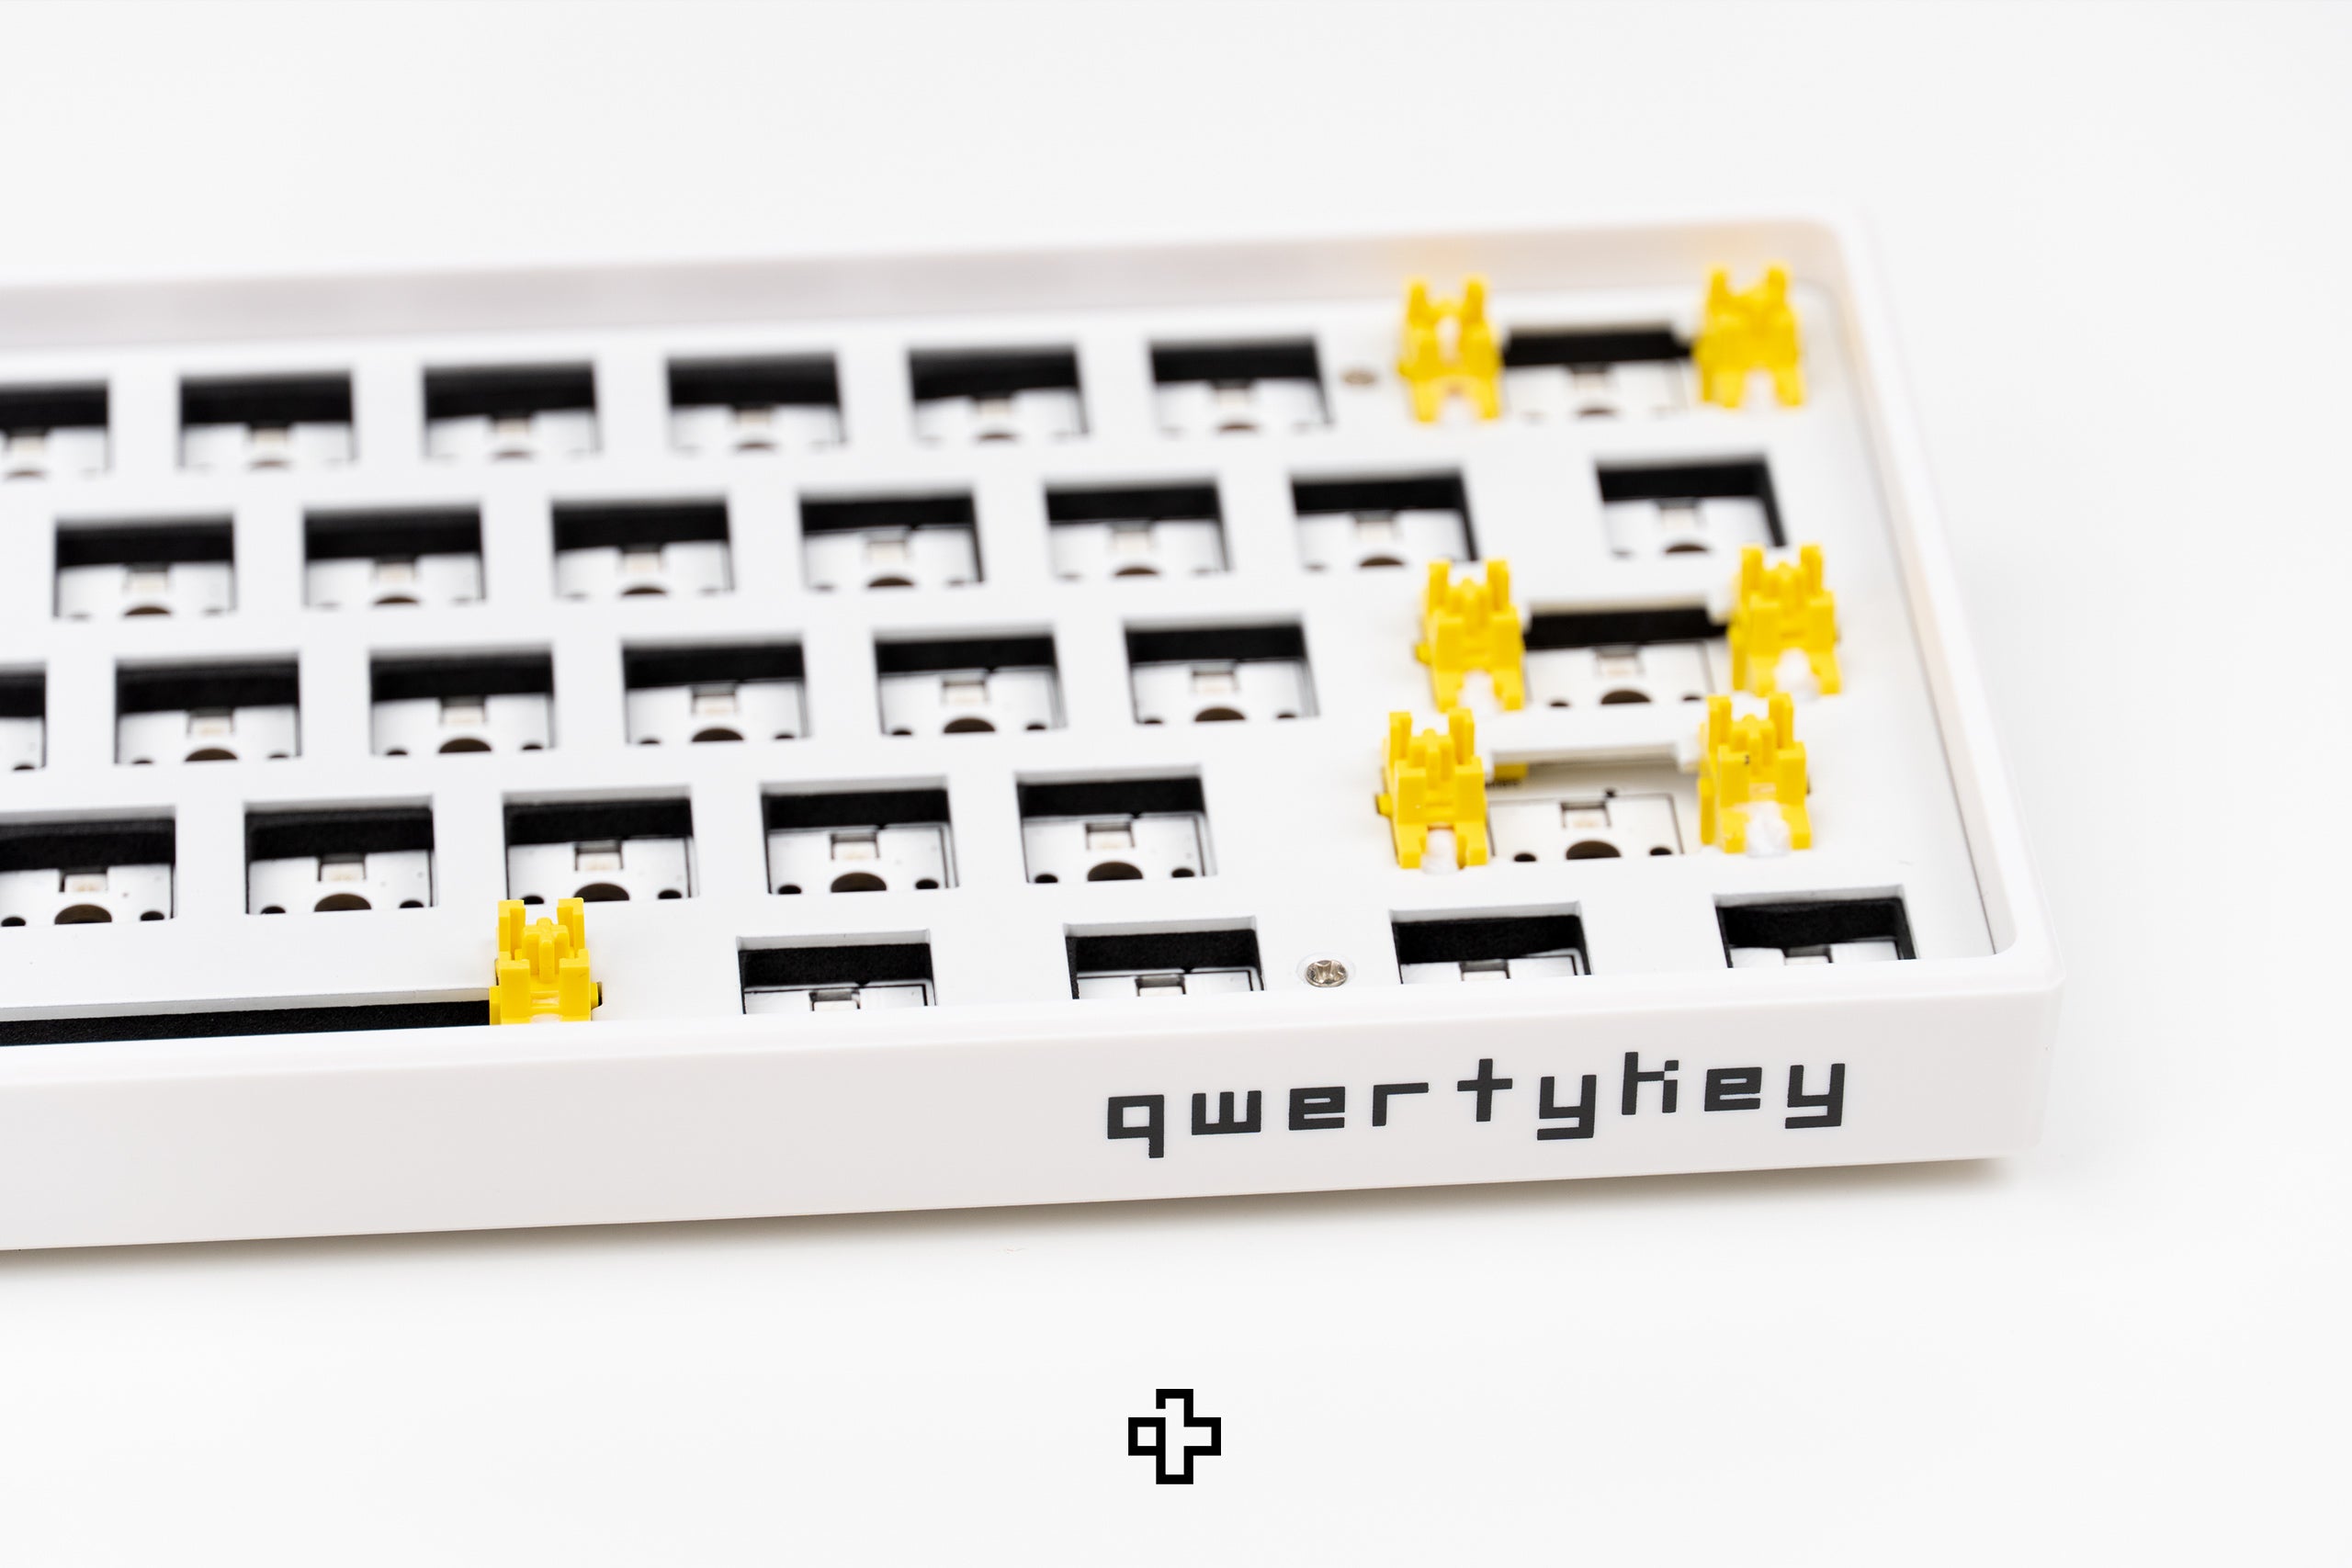 Kit QwertyKey Alb 61 Tastatura Mecanica